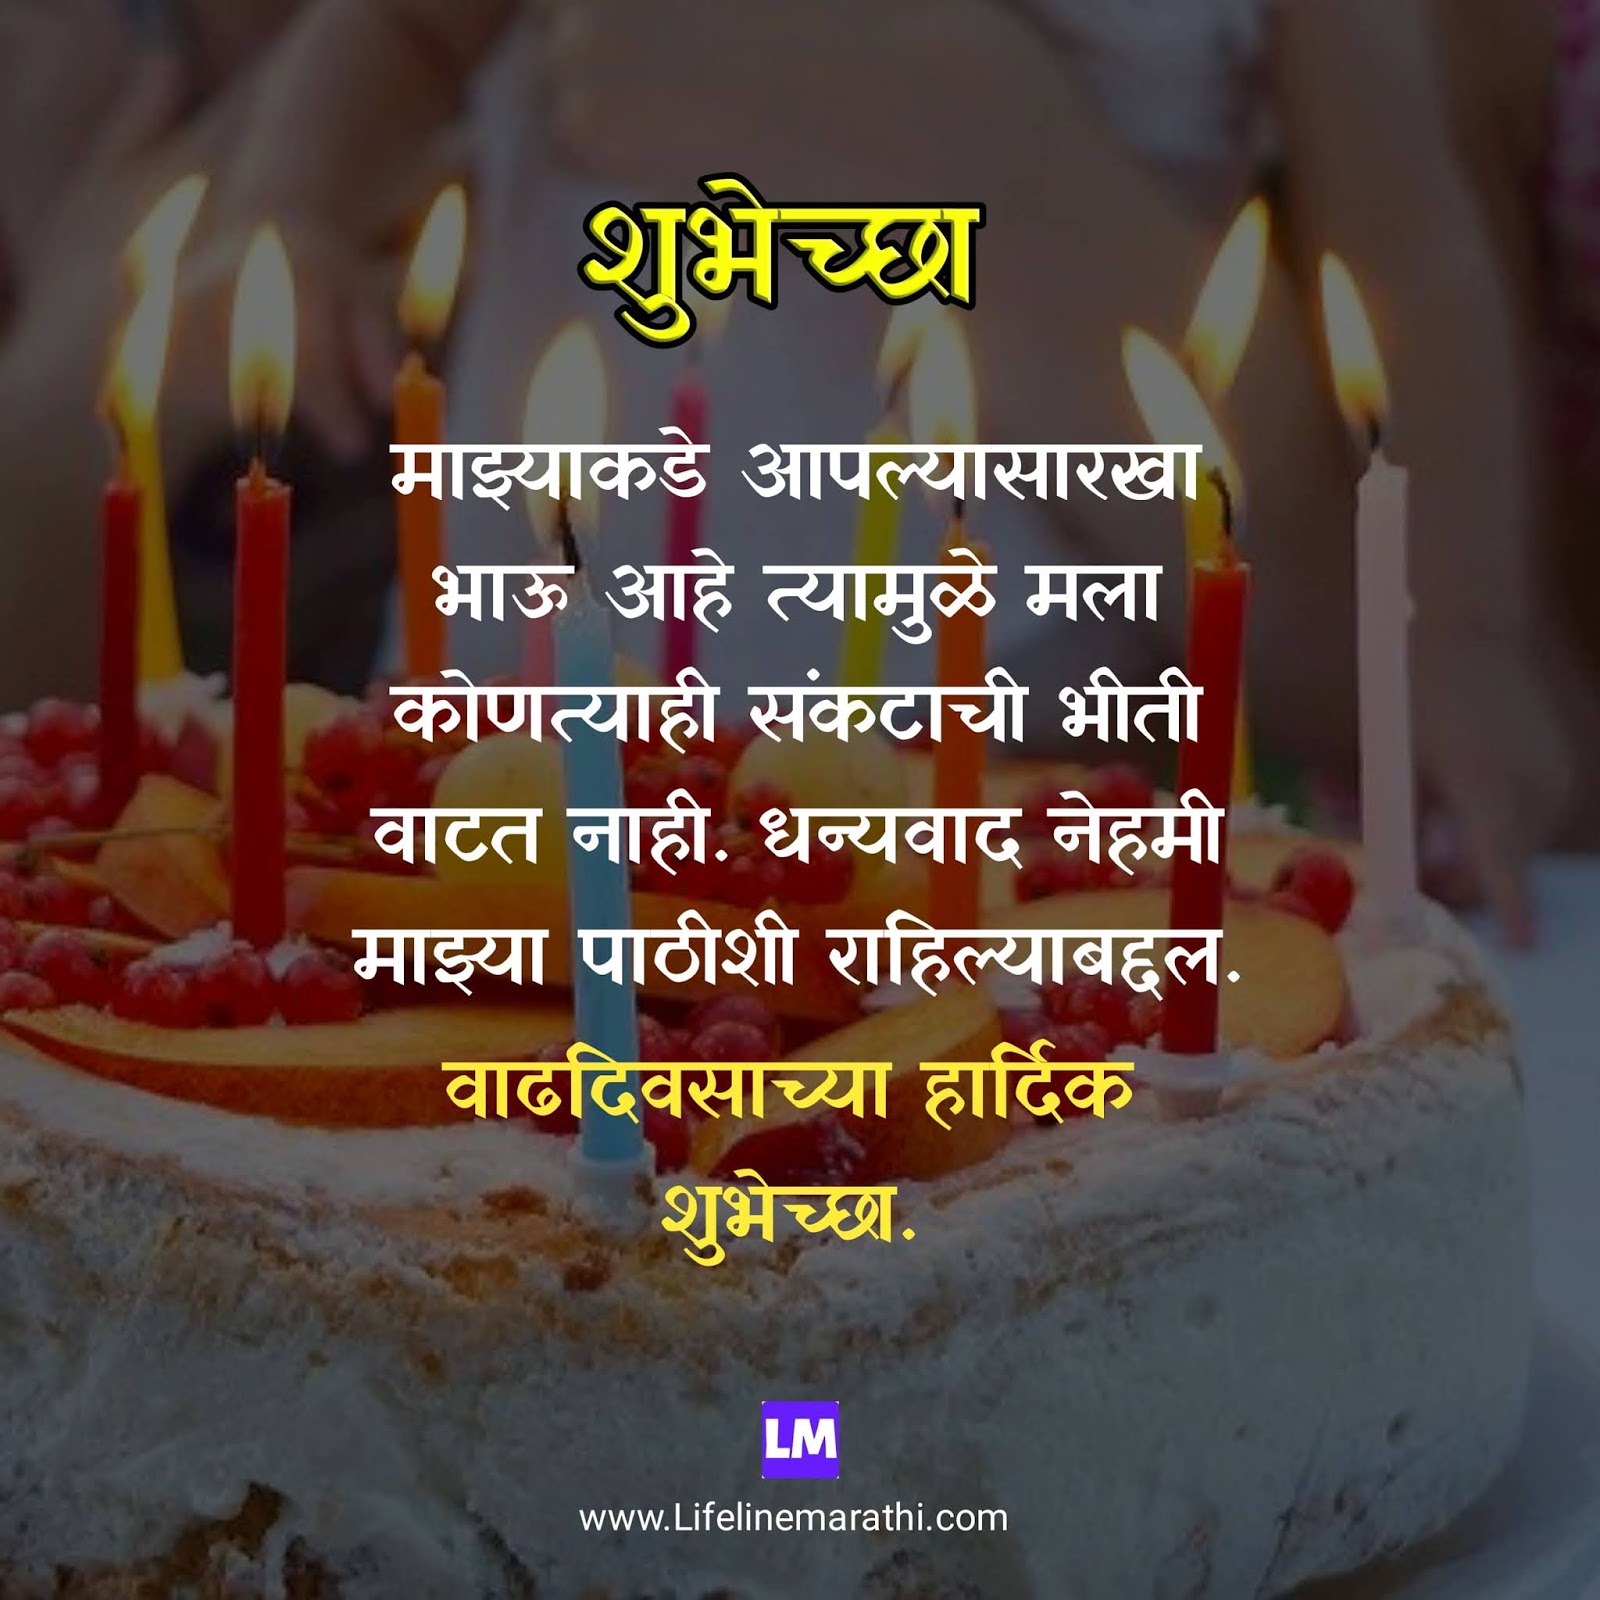 Birthday wishes in marathi for brother edgekaser